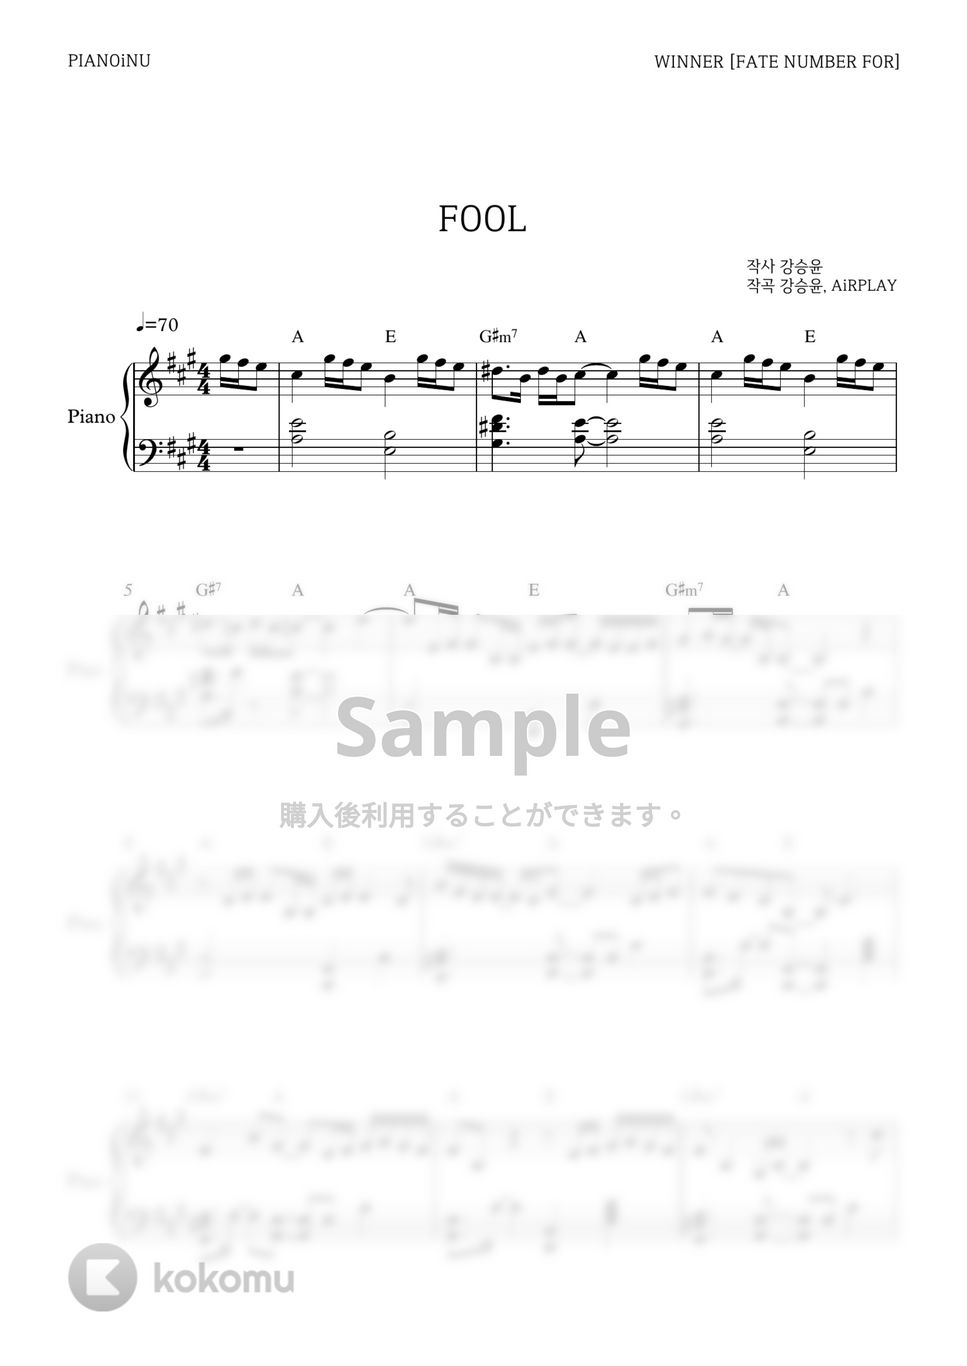 WINNER - FOOL by PIANOiNU